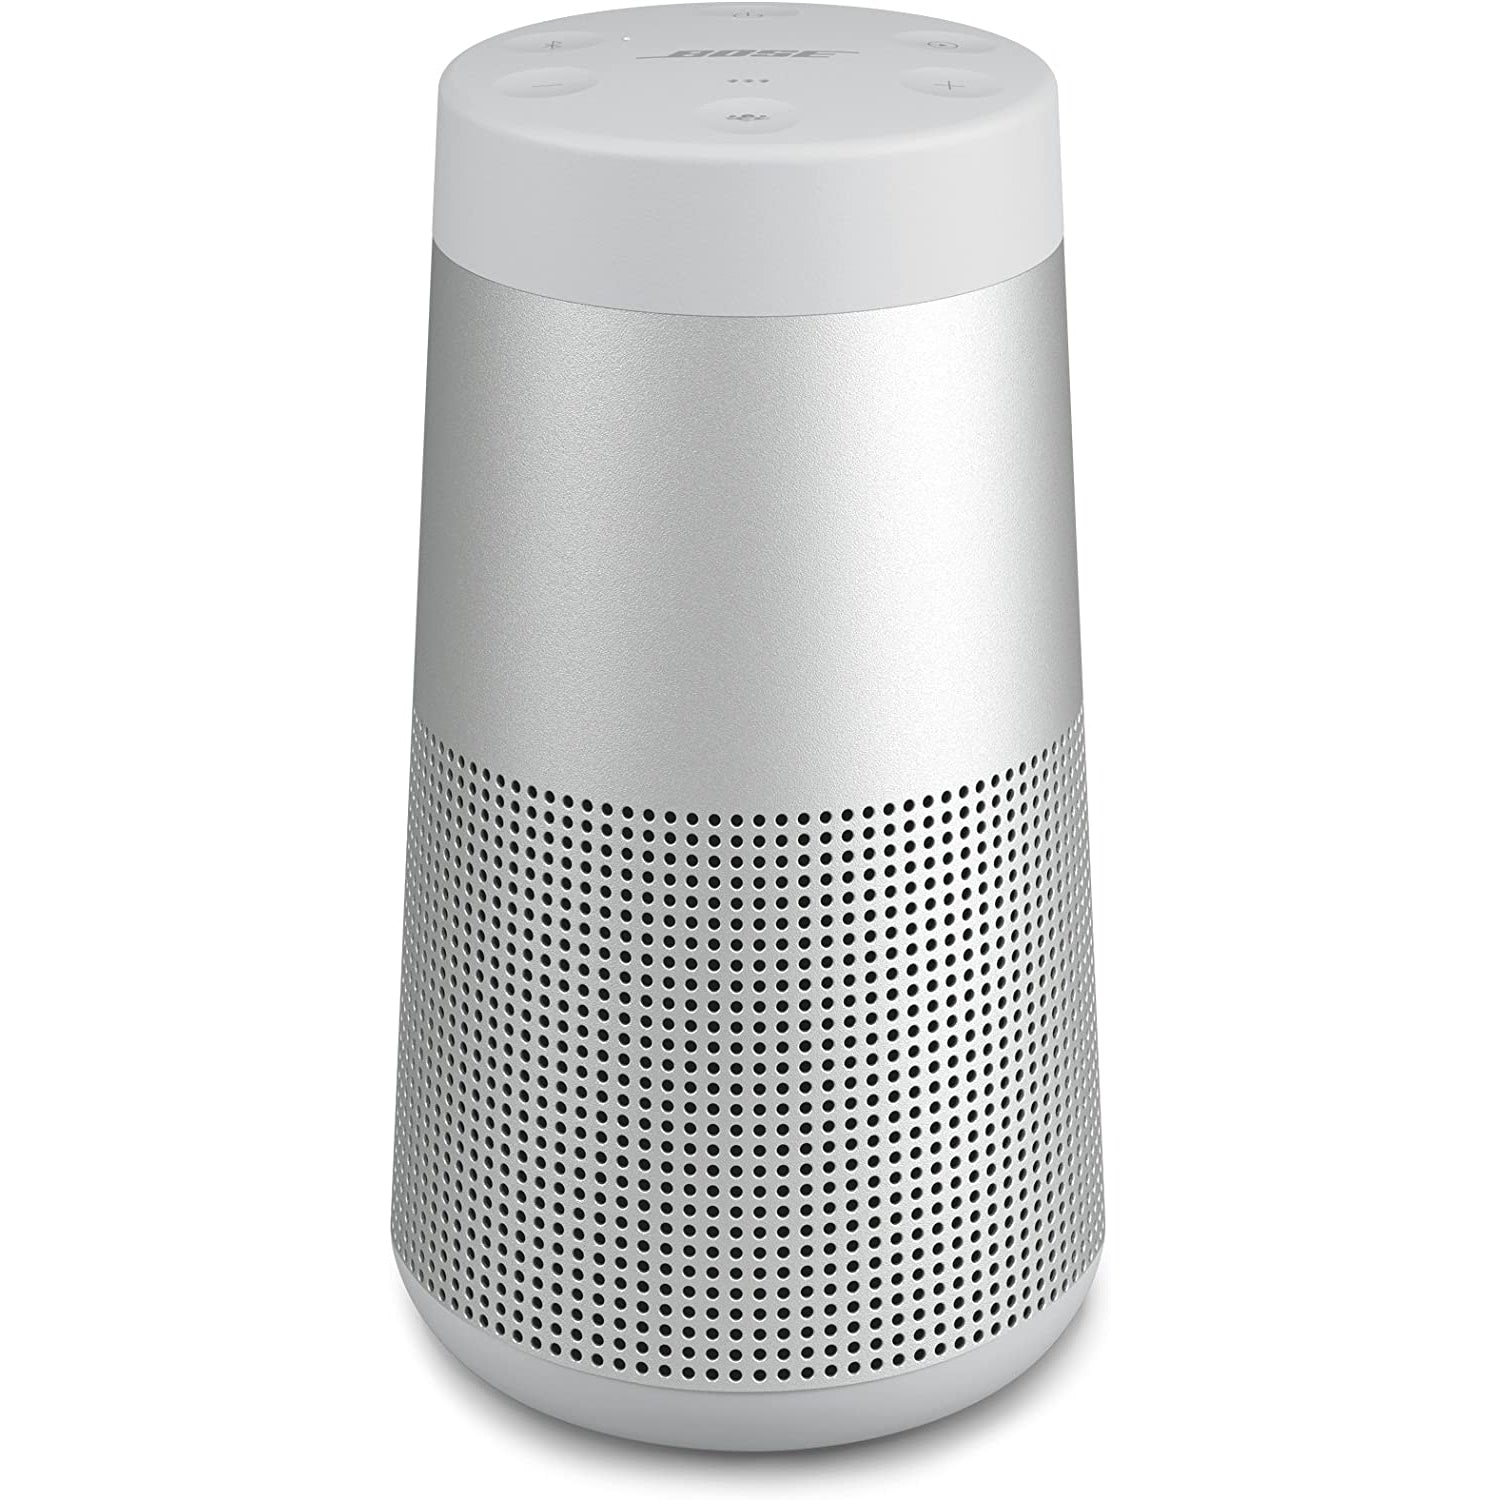 Bose SoundLink Revolve Bluetooth Speaker - Series 1 - Silver